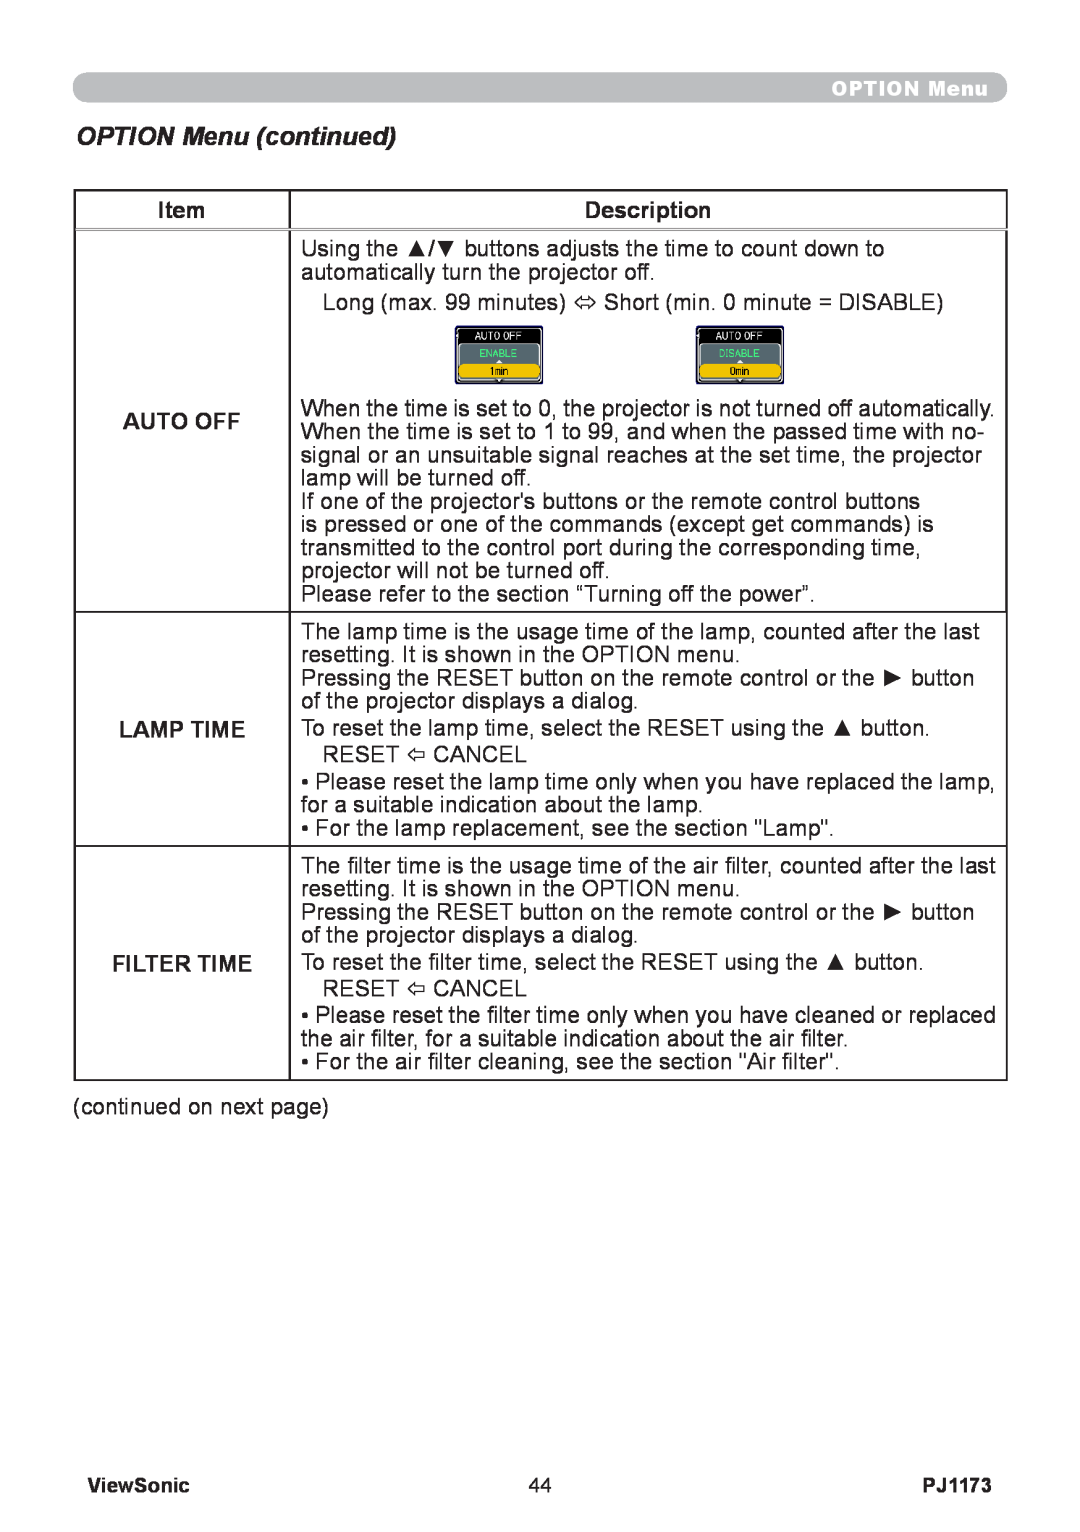 ViewSonic PJ1173, VS12109 warranty OPTION Menu continued, Item, Description, Auto Off, Lamp Time, Filter Time 